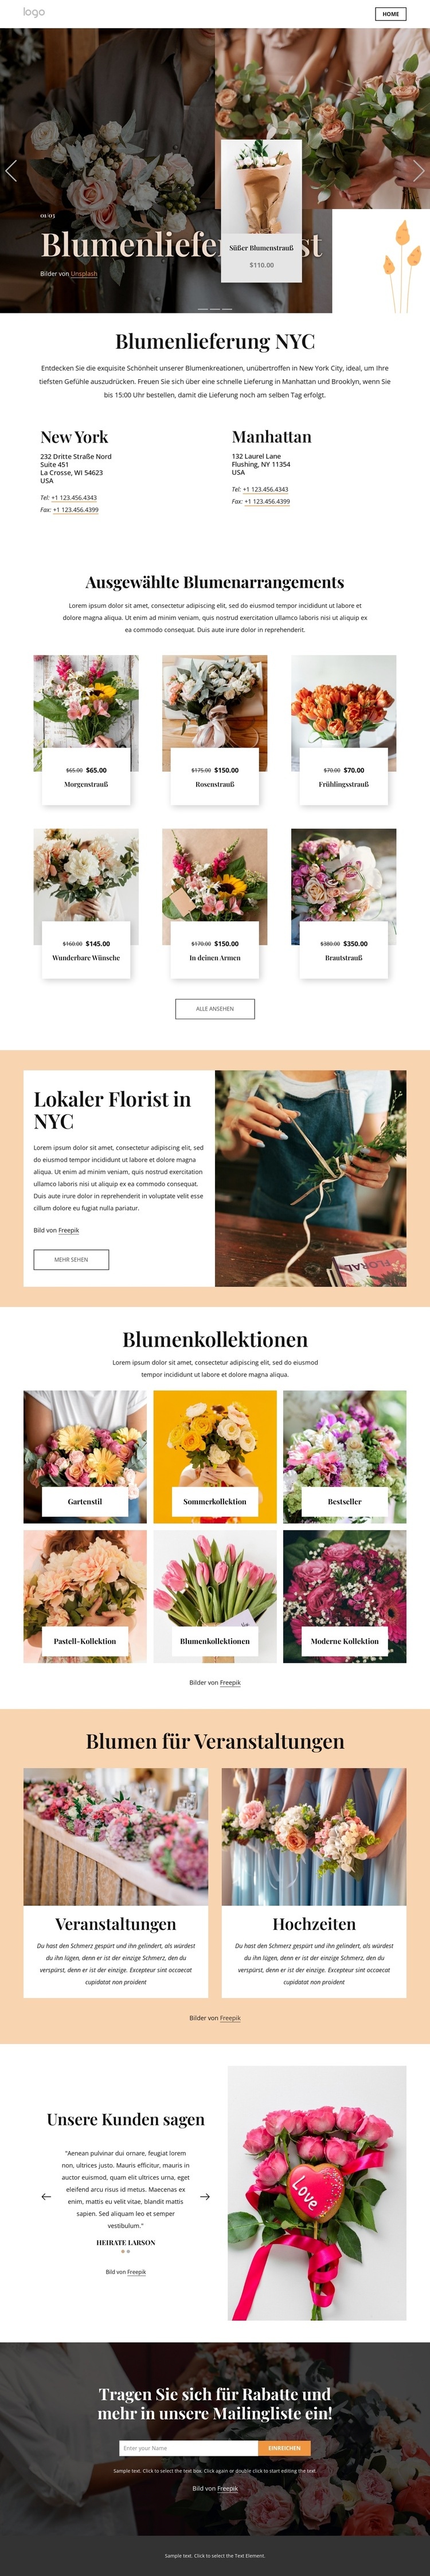 Blumenlieferung NYC Landing Page